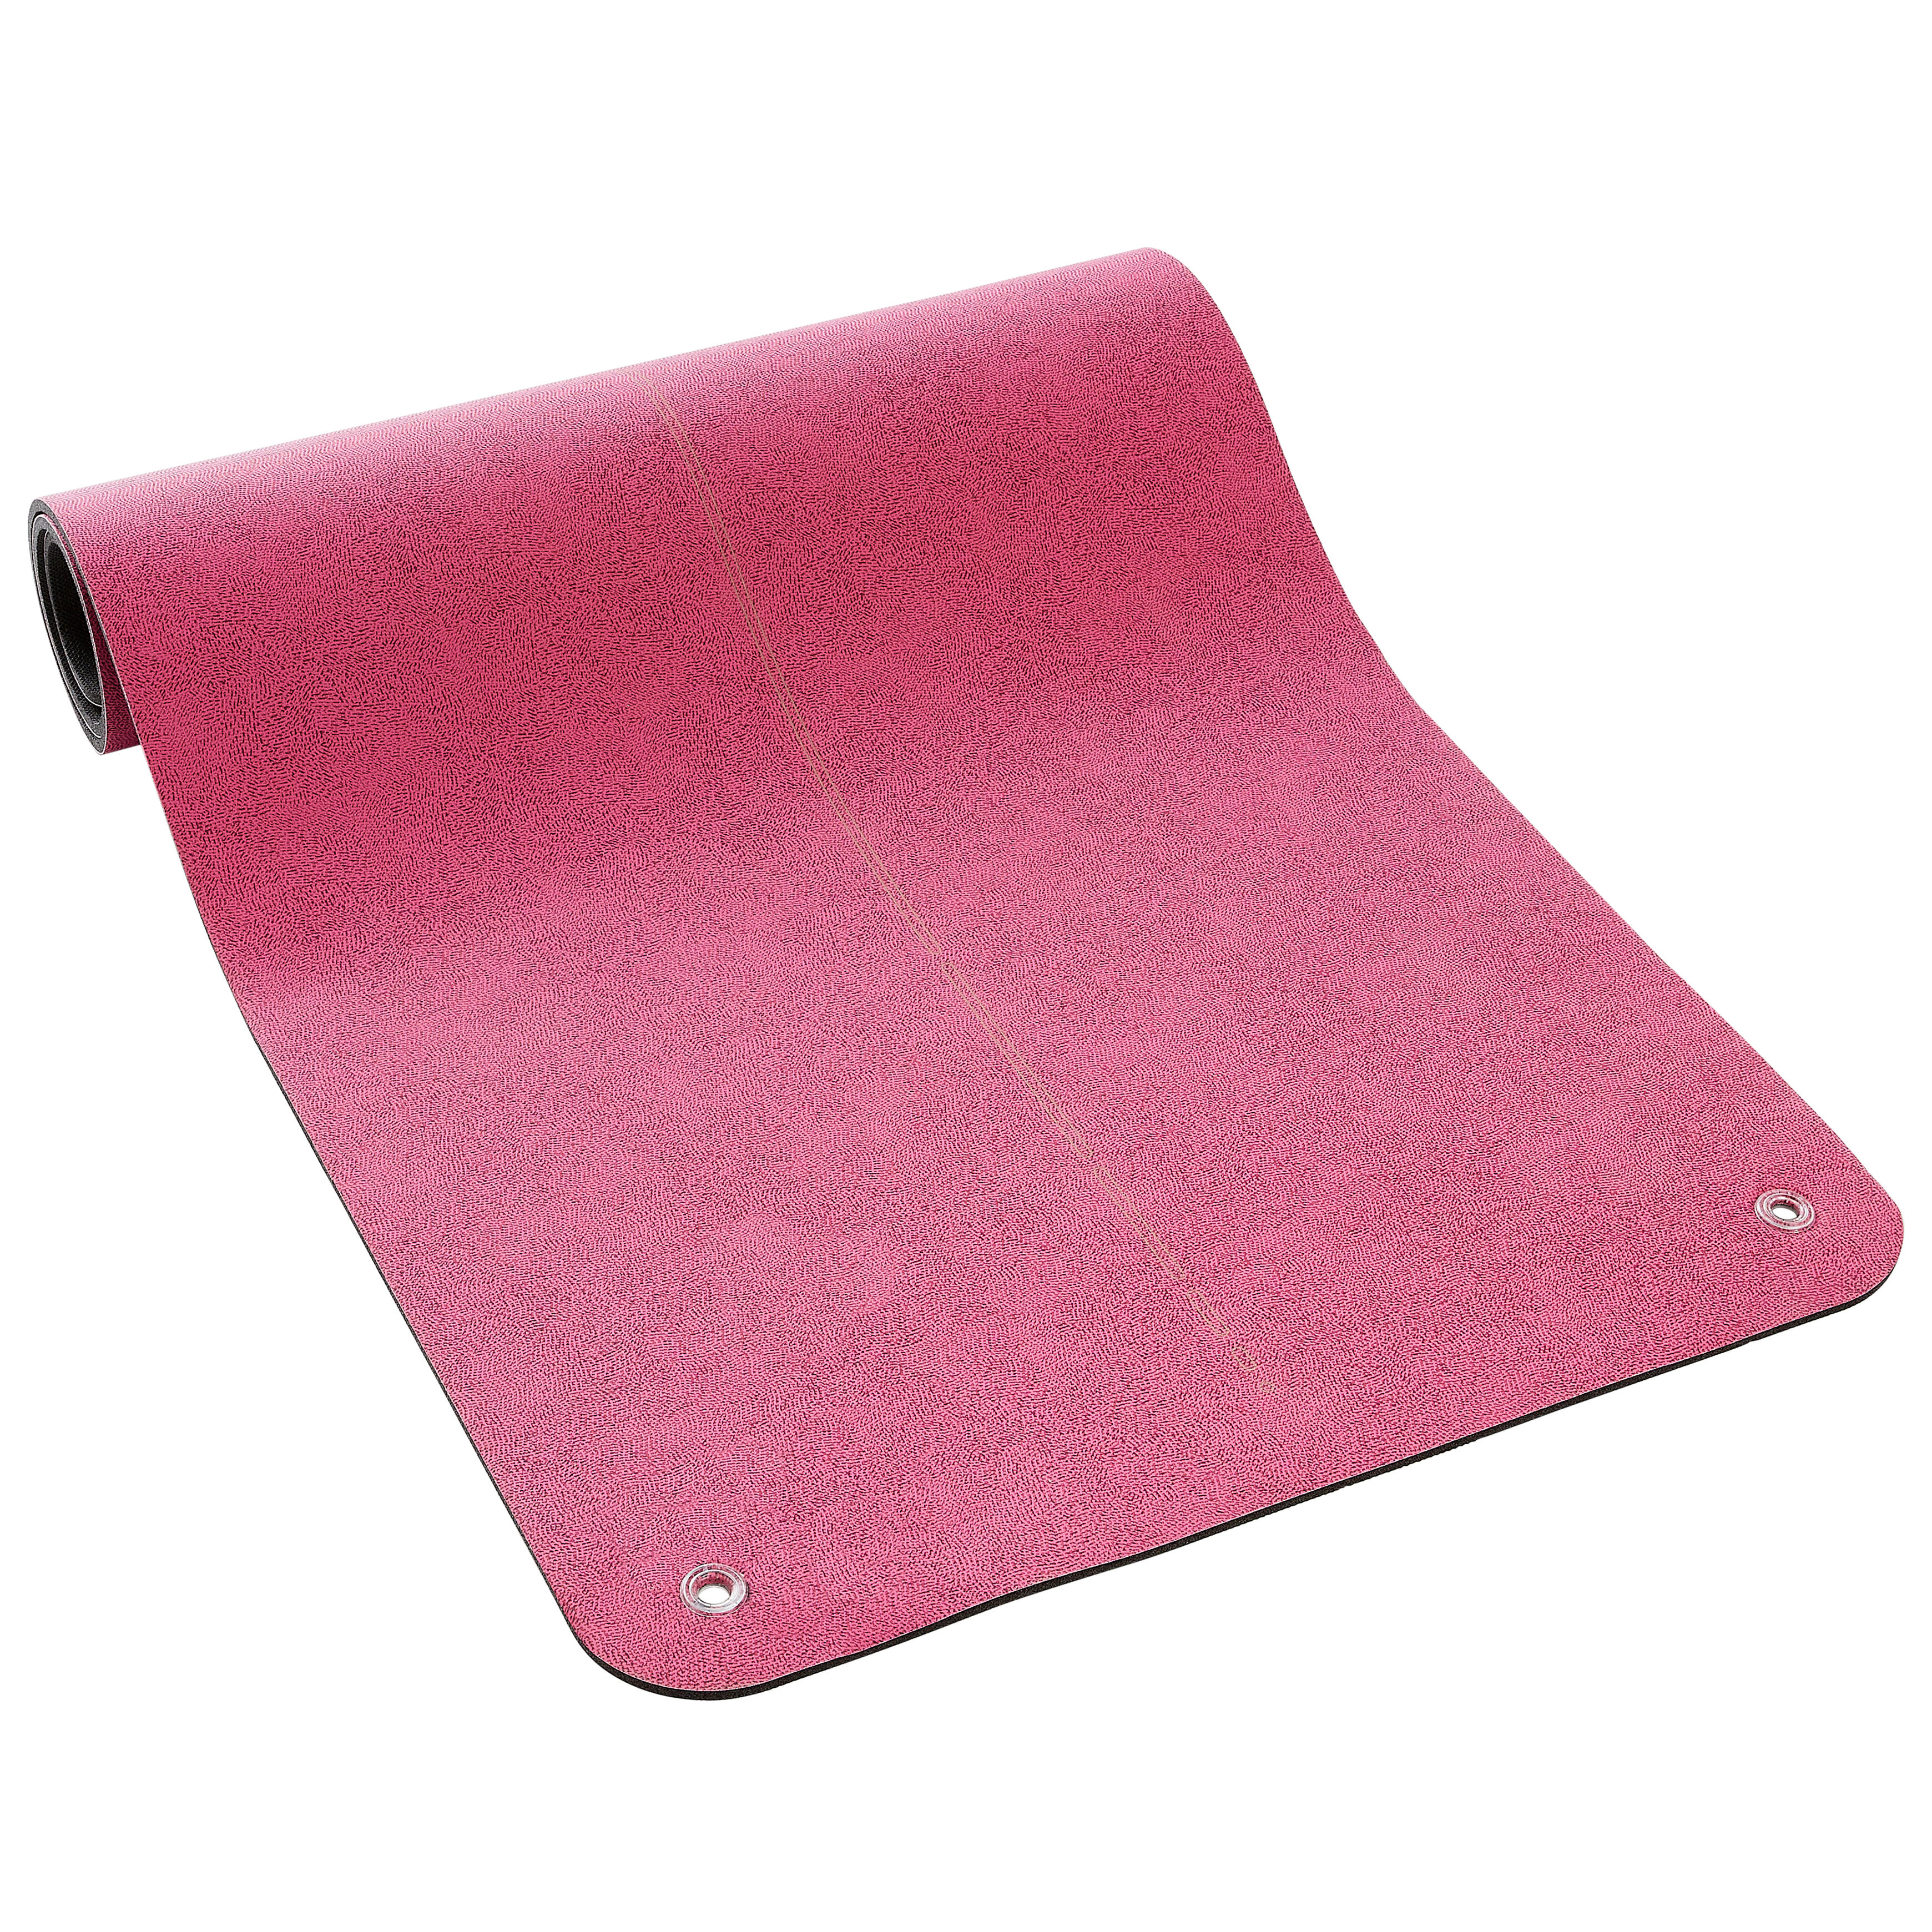 Fitness Tone Floor Mat Size S - 500 Pink - Blush pink, Purple